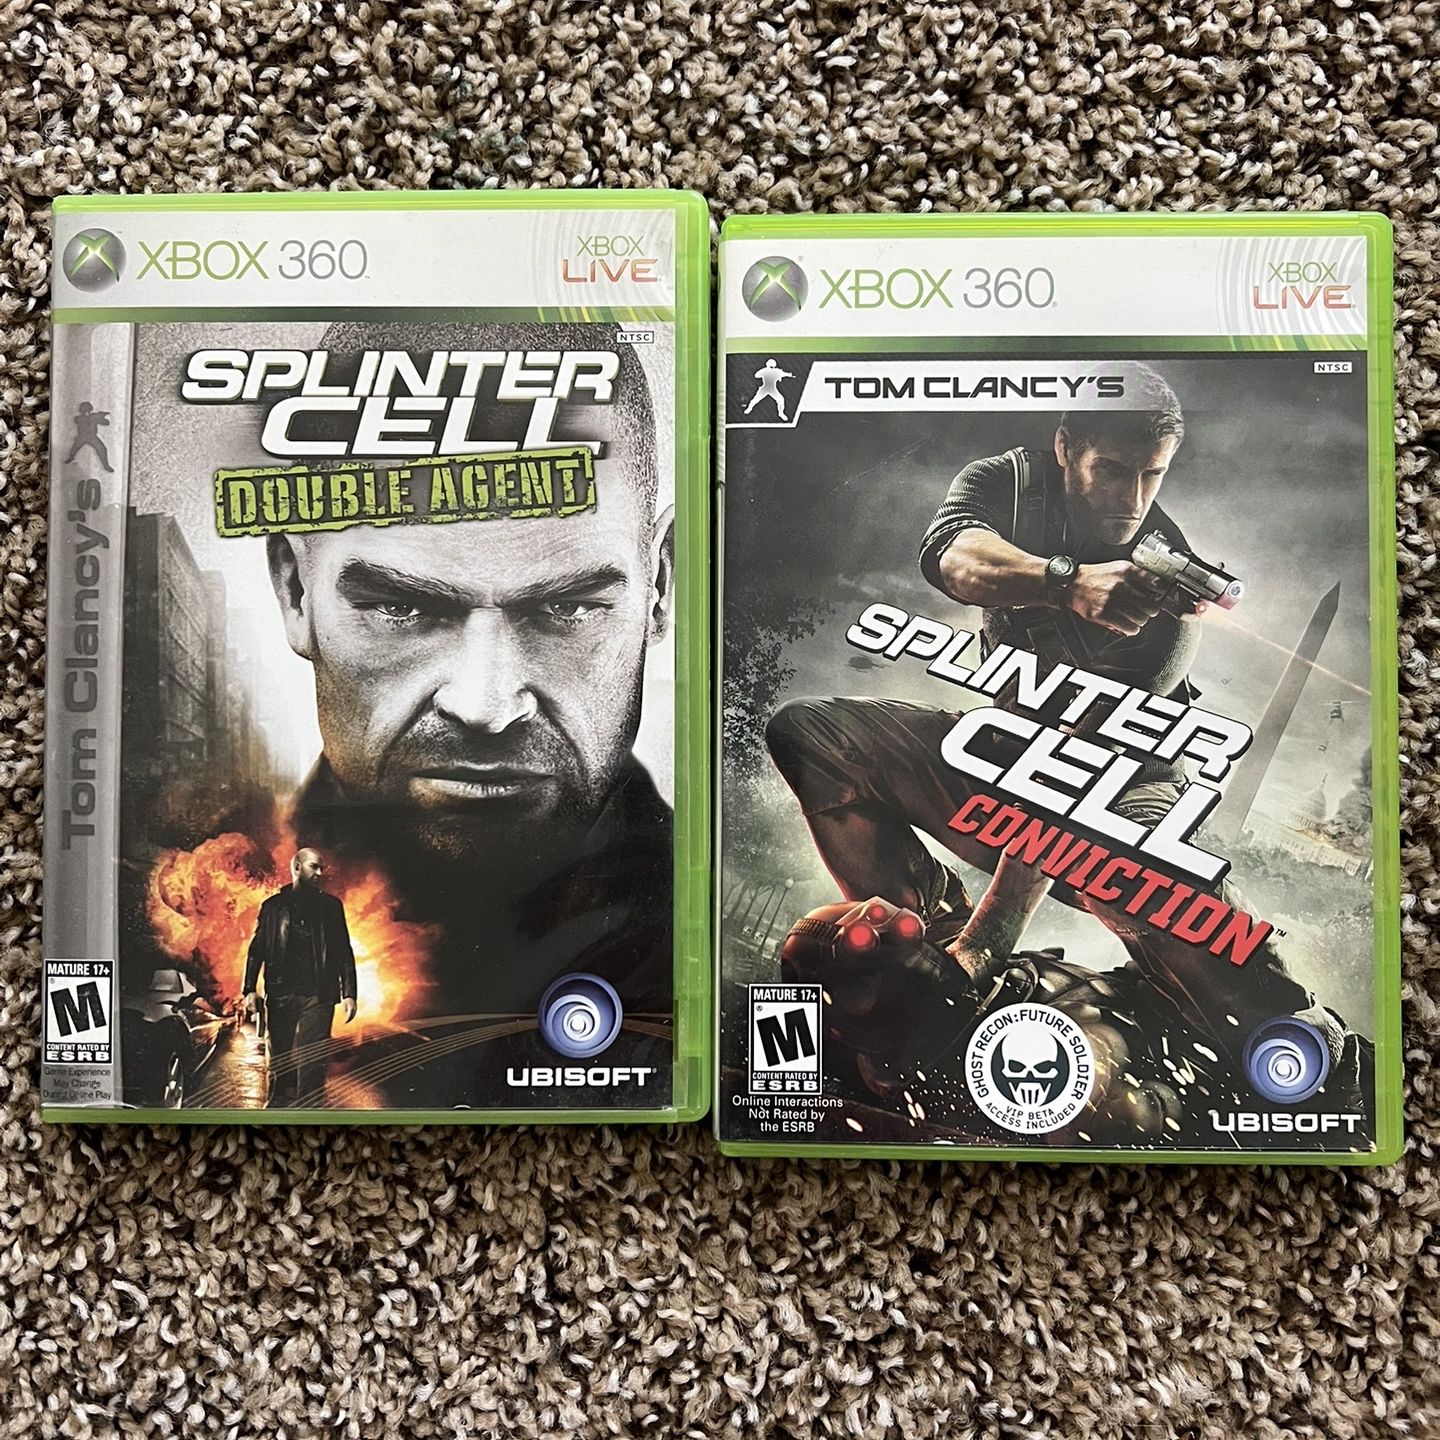 Xbox 360 2 games: Splinter Cell Double Agent & Splinter Cell Conviction